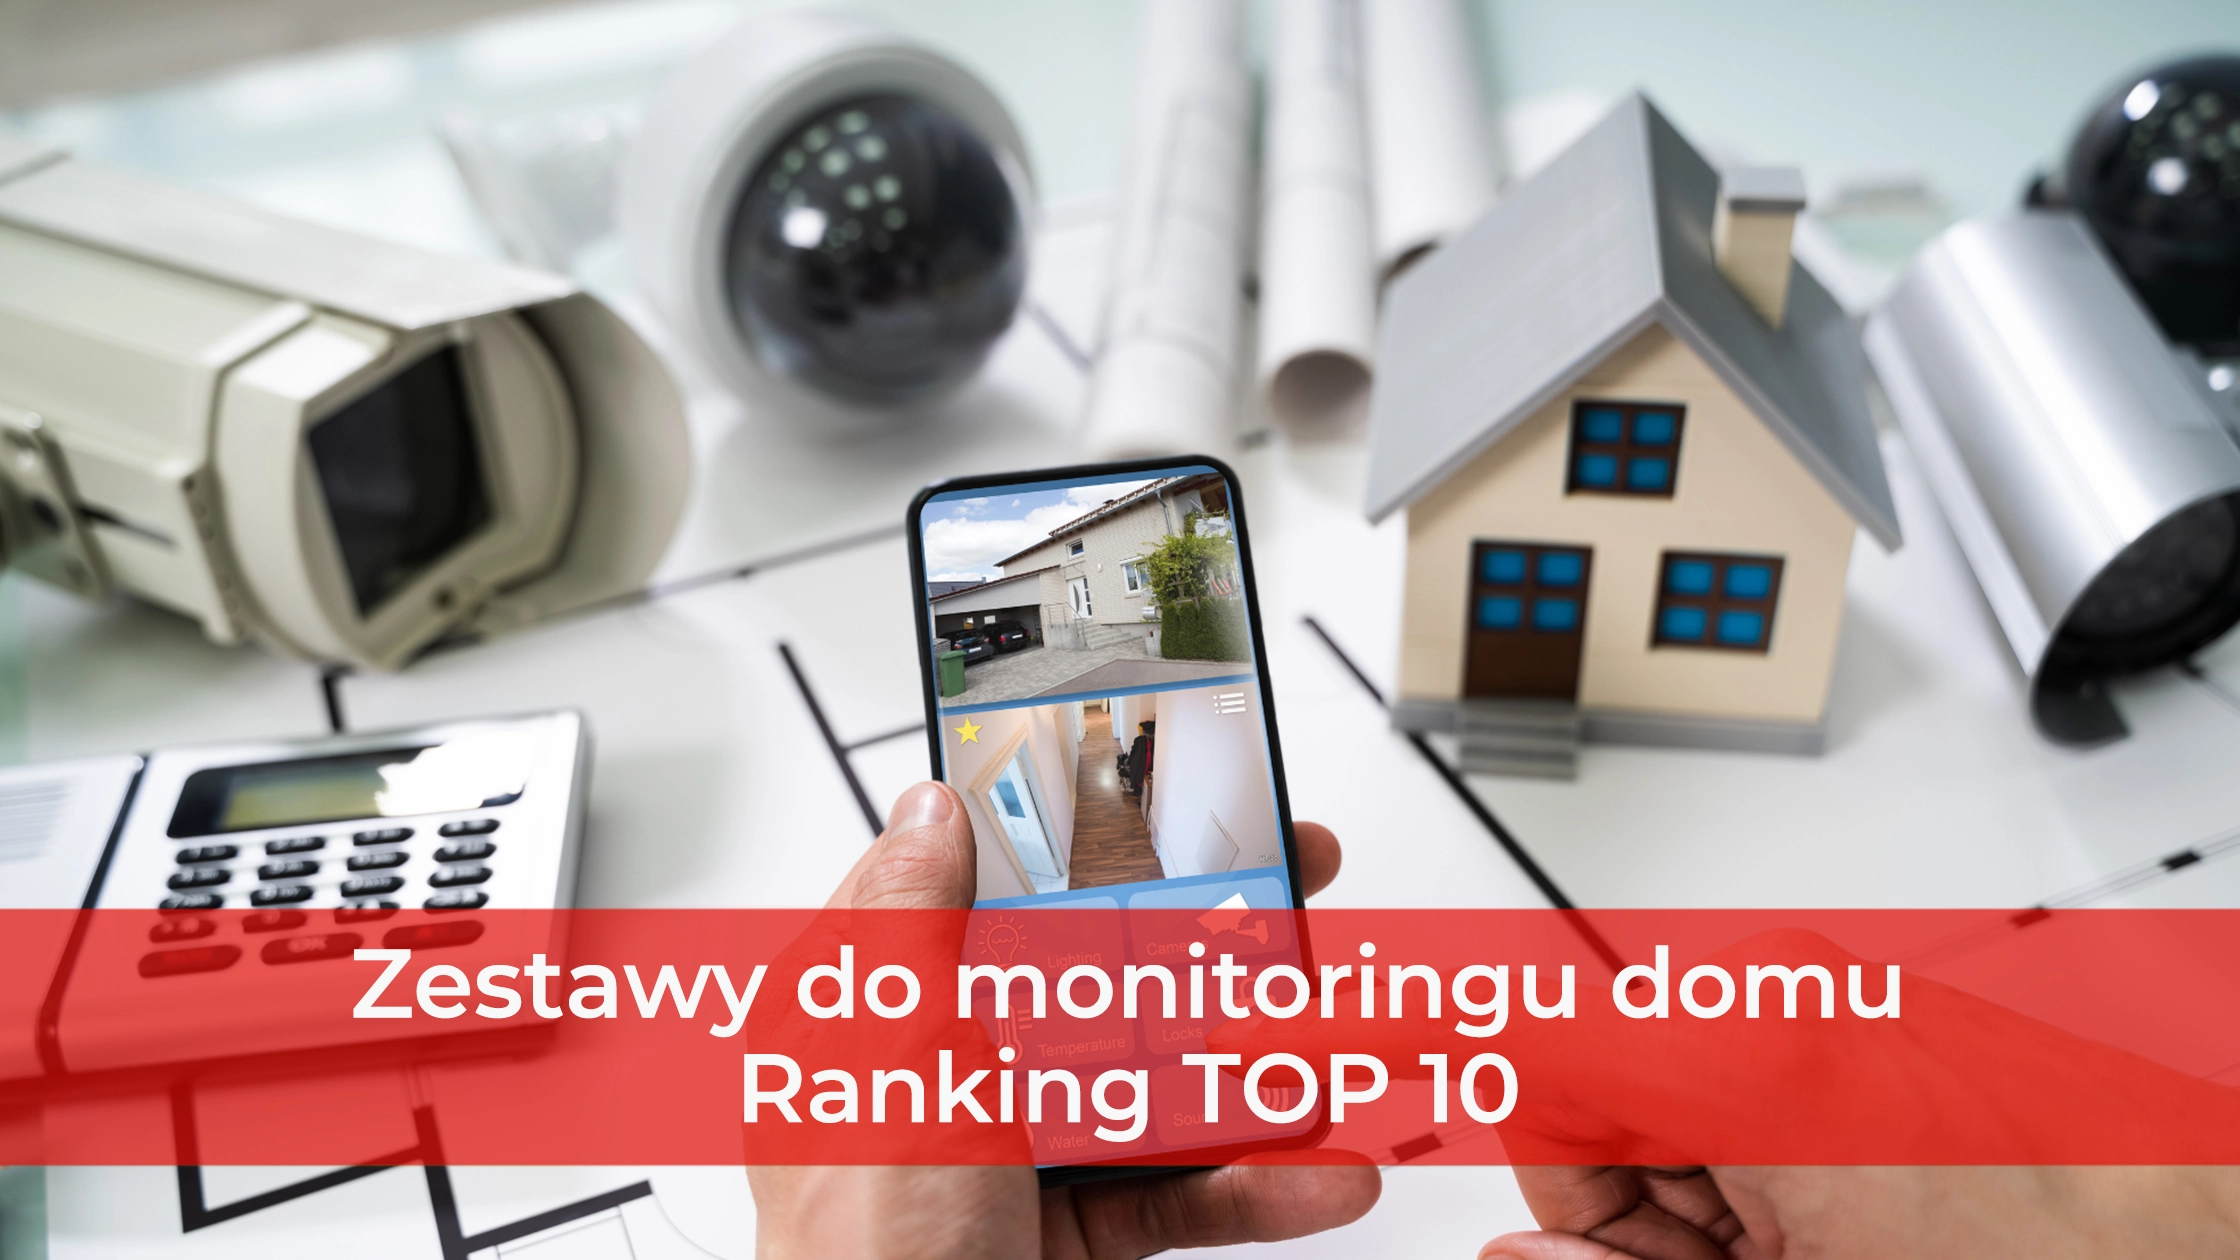 Monitoring domu - ranking top 5